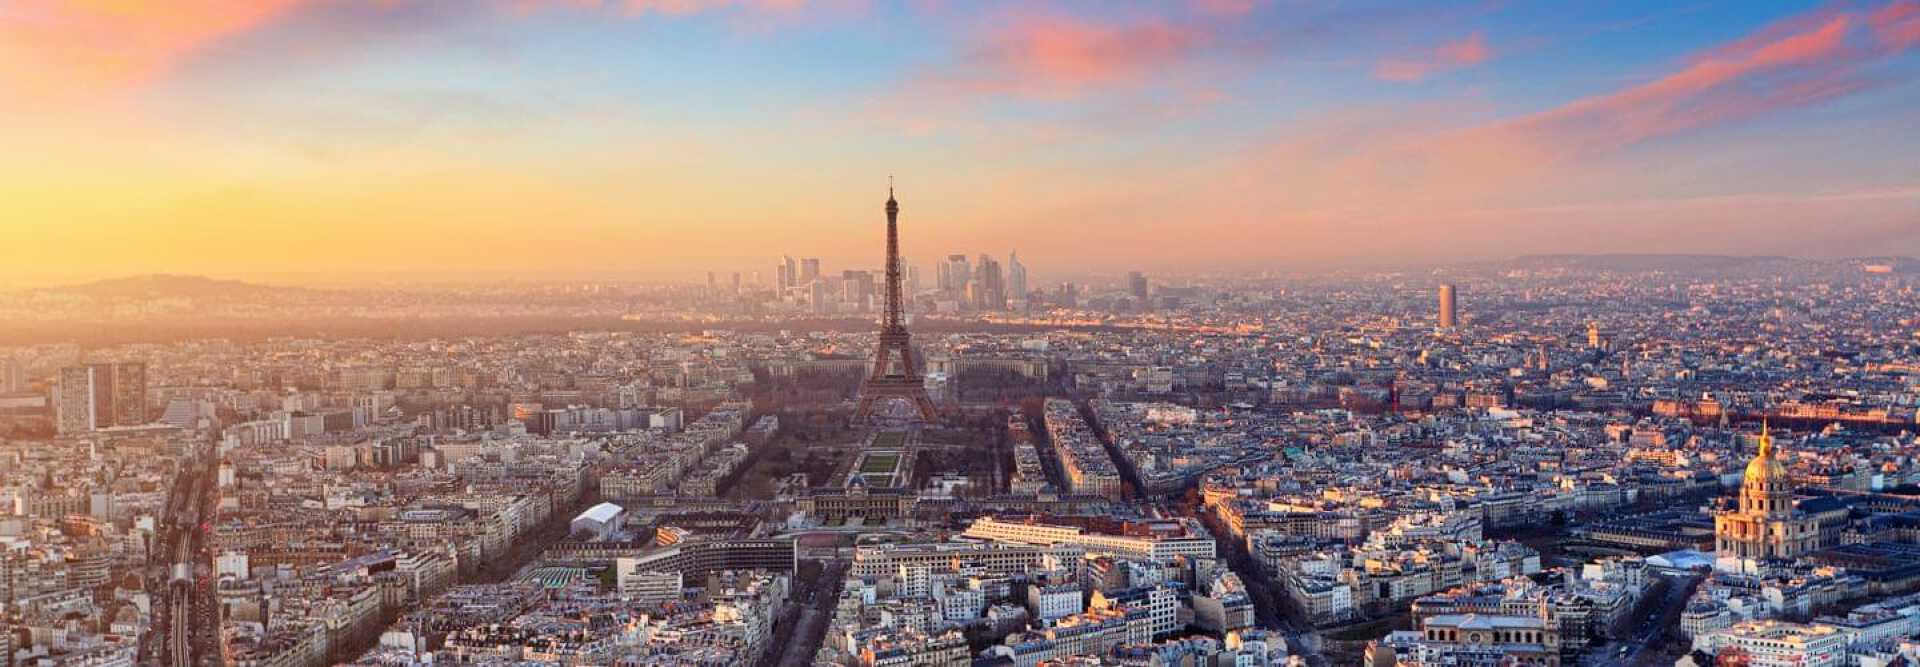 Skyline of Paris with Tour Eiffel and Champs de Mars and Invalides and La Défense